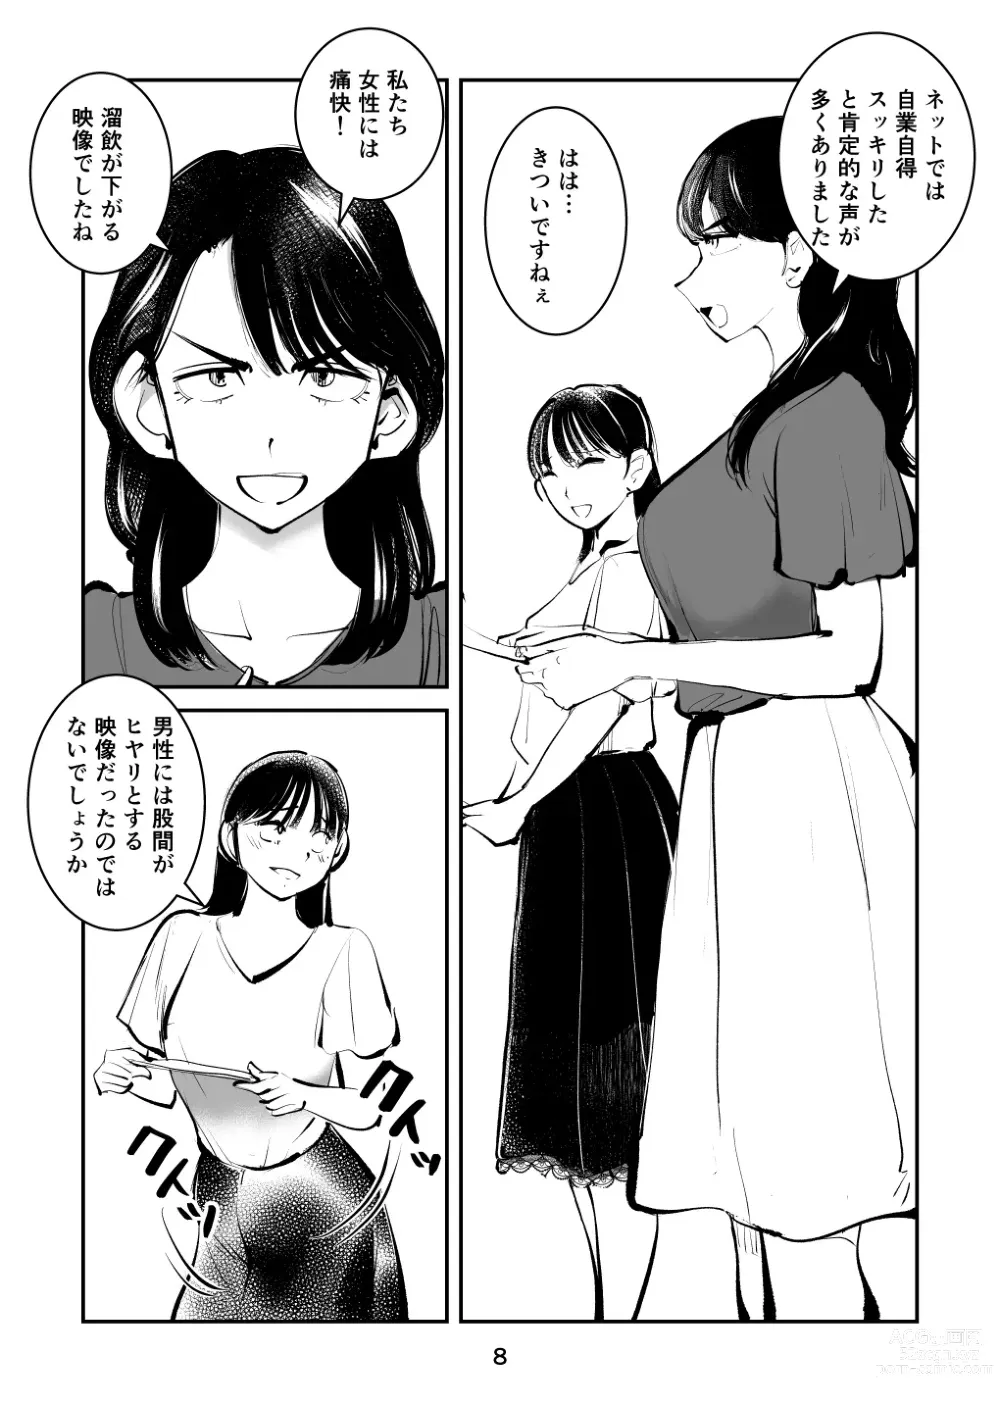 Page 8 of doujinshi Kinkeri onna keiji ryōko